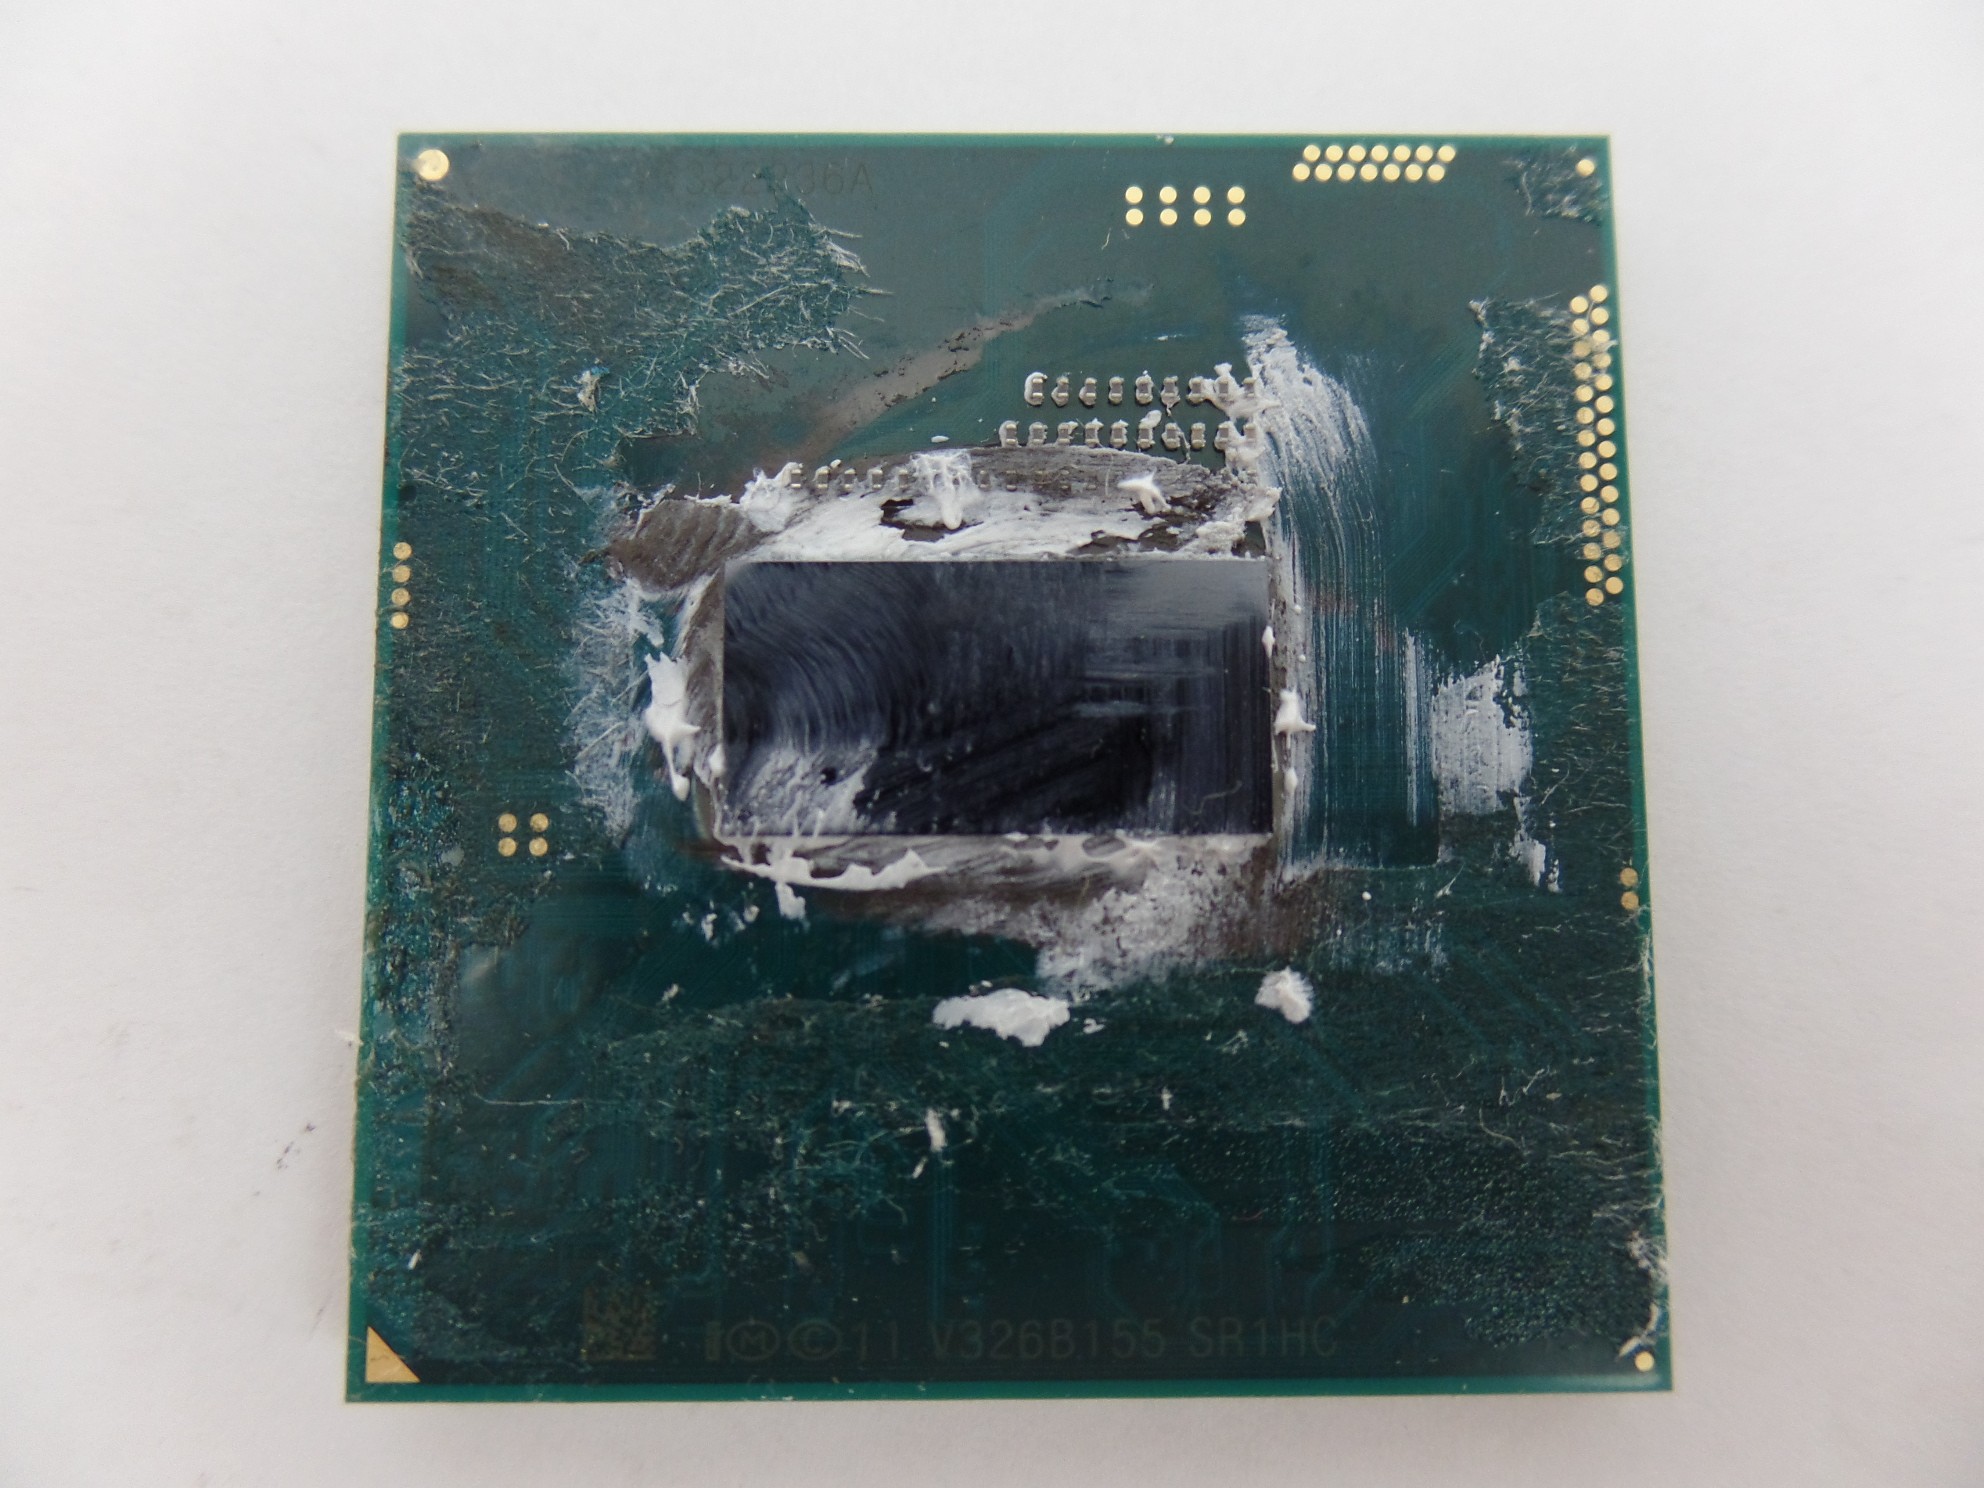 Intel Core i3-4100M SR1HC 2.4GHz Dual Core Desktop CPU Socket Processor